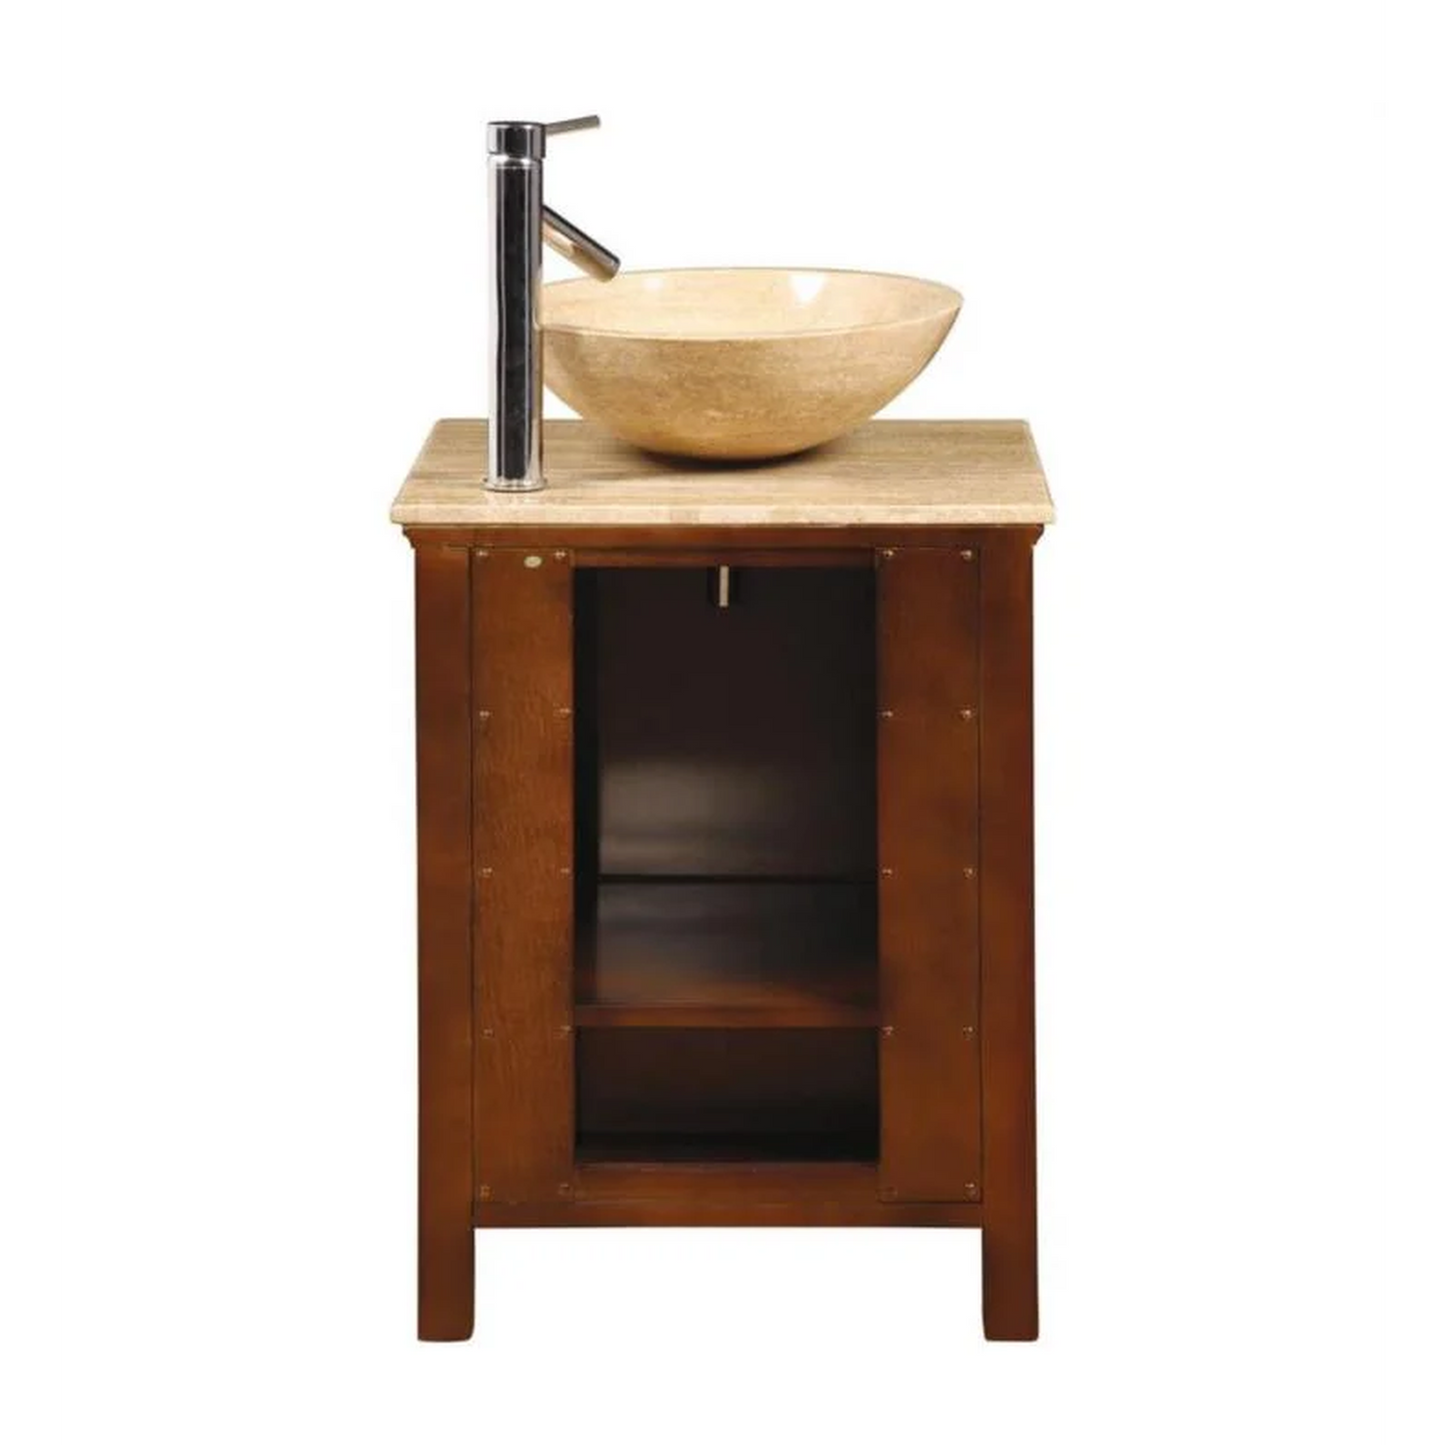 Silkroad Exclusive 22" Single Sink American Chestnut Bathroom Vanity With Travertine Countertop and Travertine Round Vessel Sink